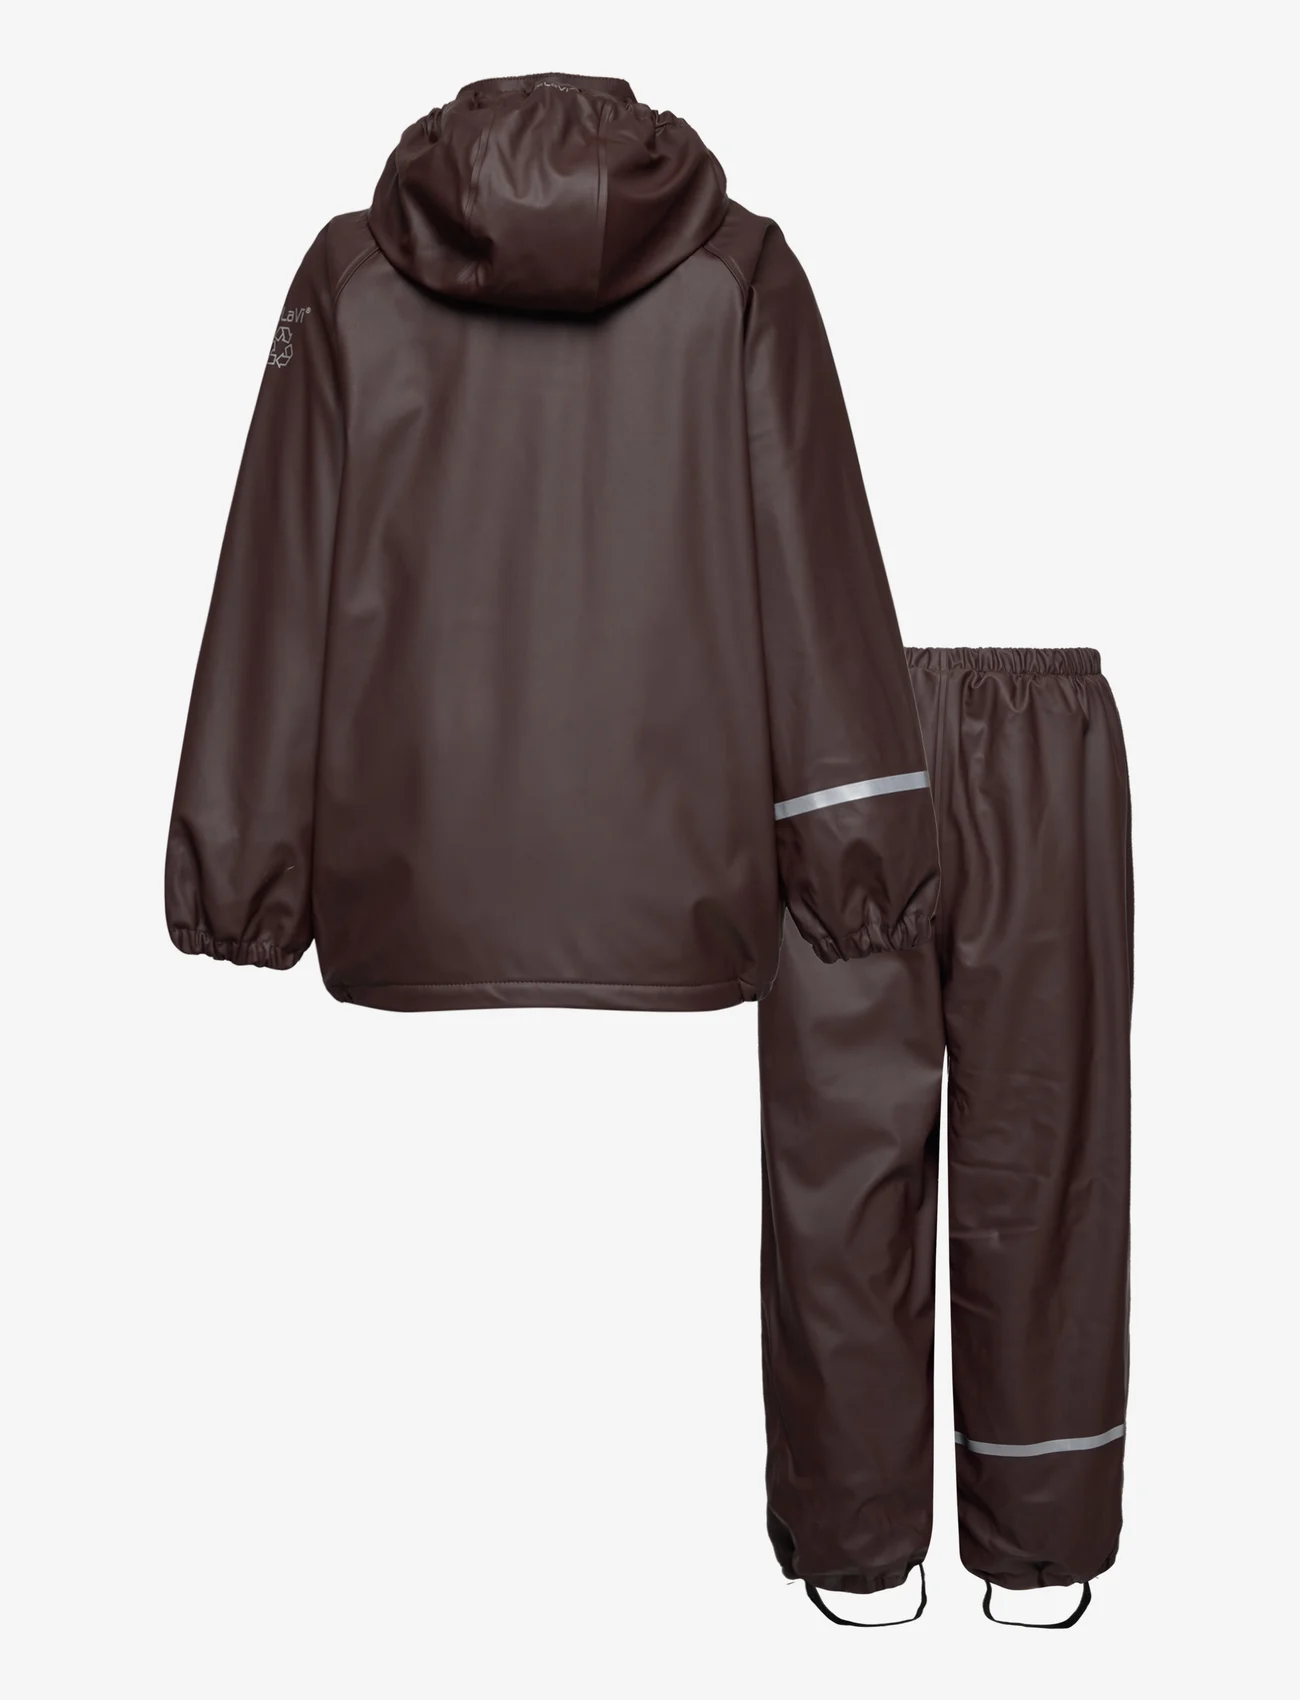 CeLaVi - Rainwear Set -Solid, w.fleece - Žieminiai kombinezonai - java - 1